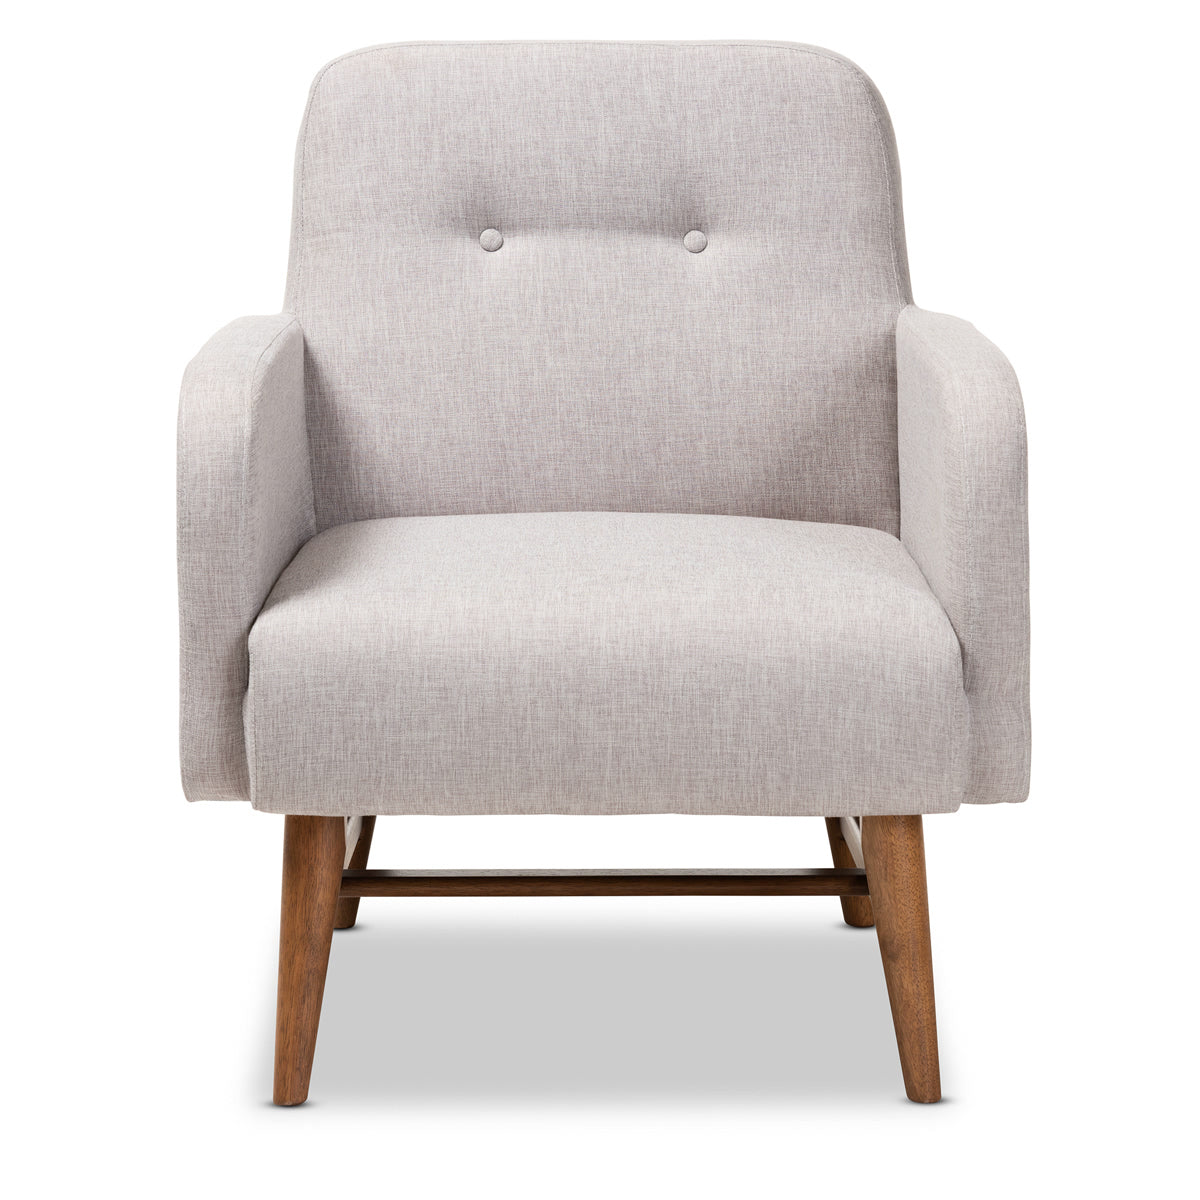 Baxton Studio Perrine Mid-Century Modern Greyish Beige Fabric Upholstered Walnut-Finished Wood Lounge Chair Baxton Studio-chairs-Minimal And Modern - 2